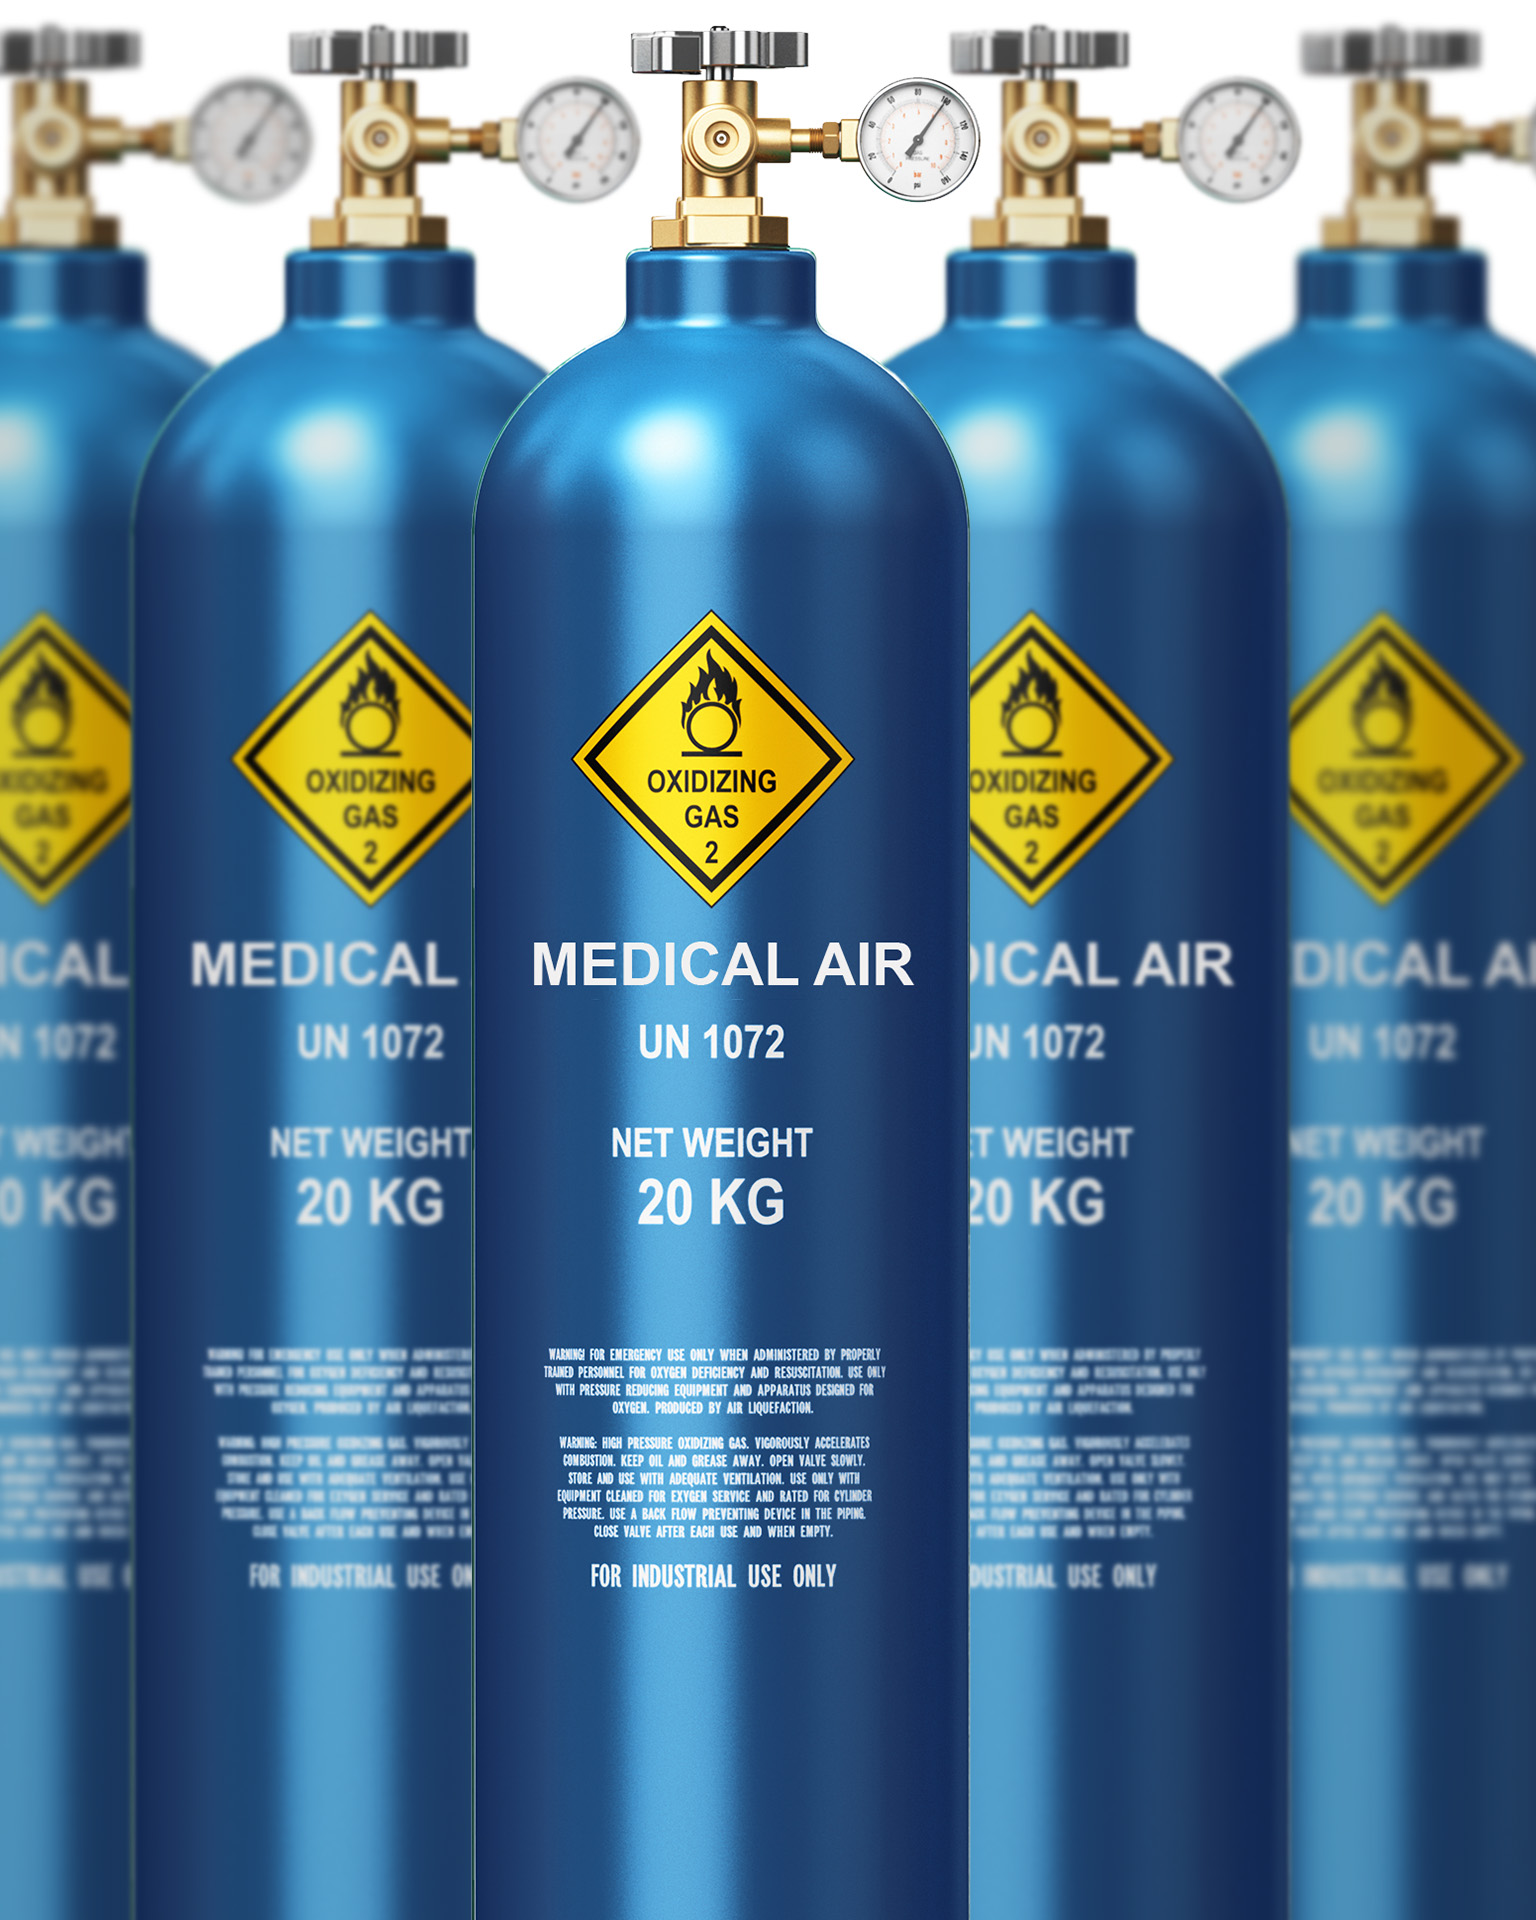 IMG - Web - Buy Medical Air